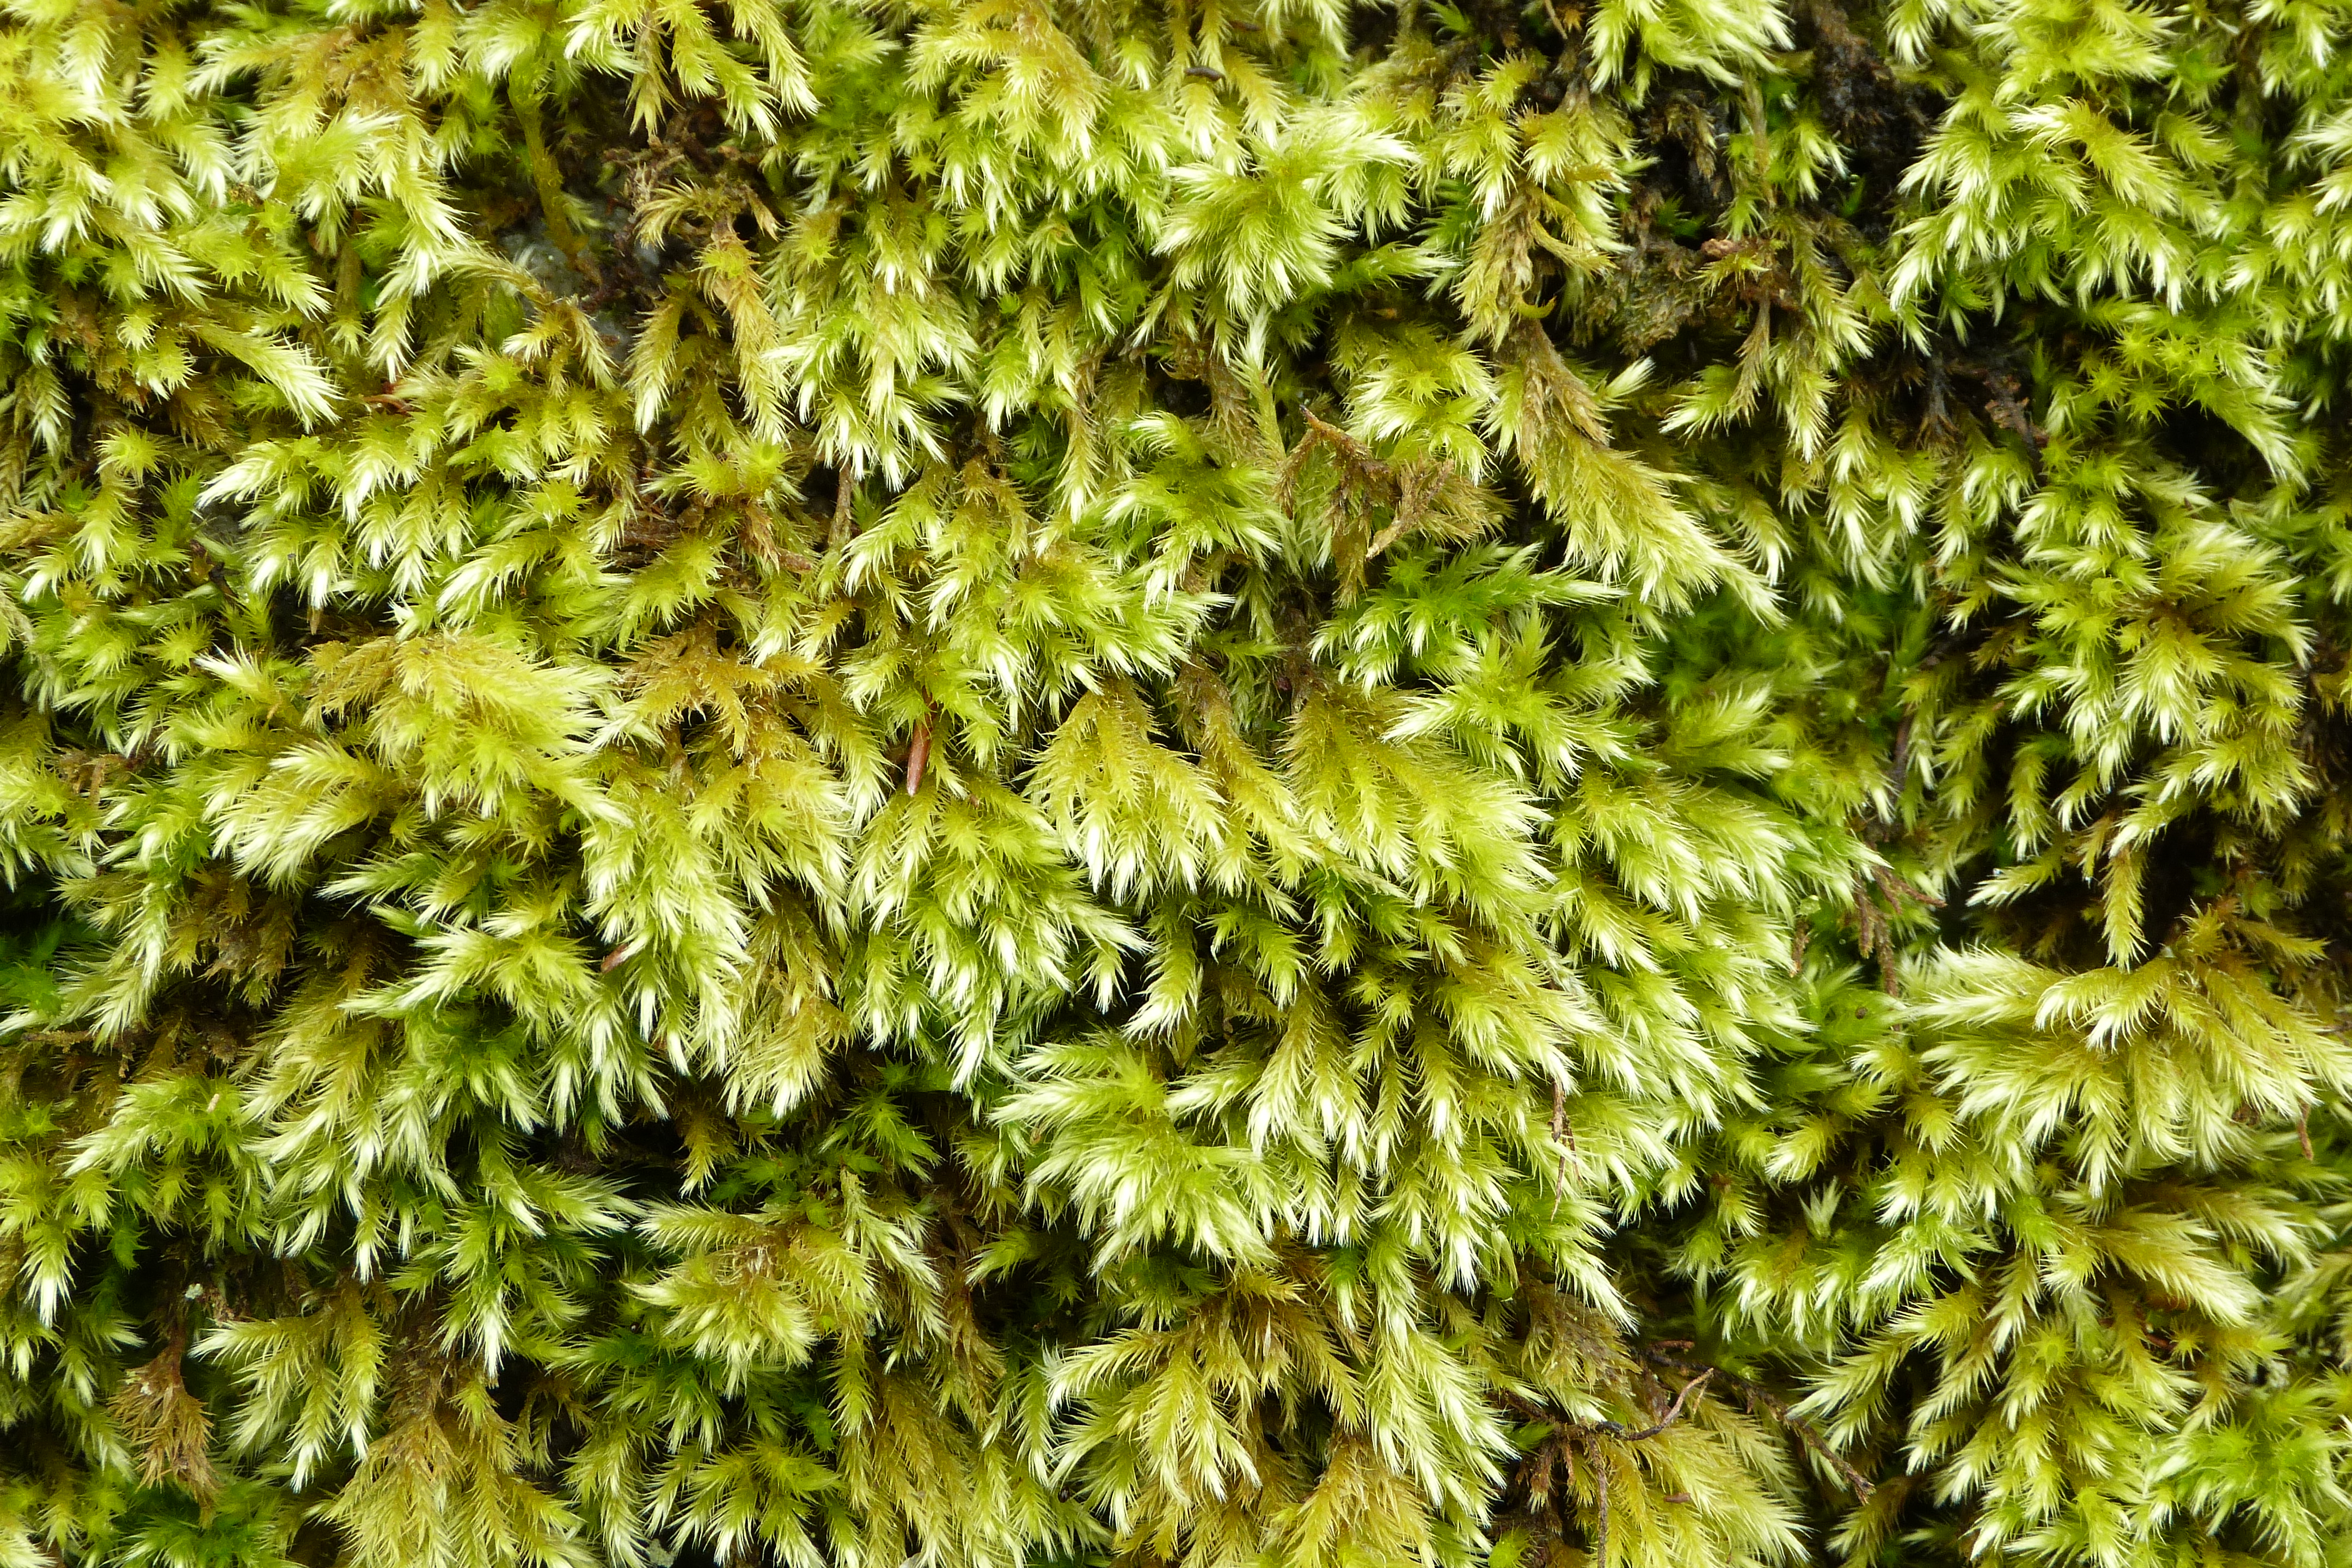 Silky Wall Feather-moss, Homalothecium sericeum, Giggleswick, Churchyard, 19.3.2